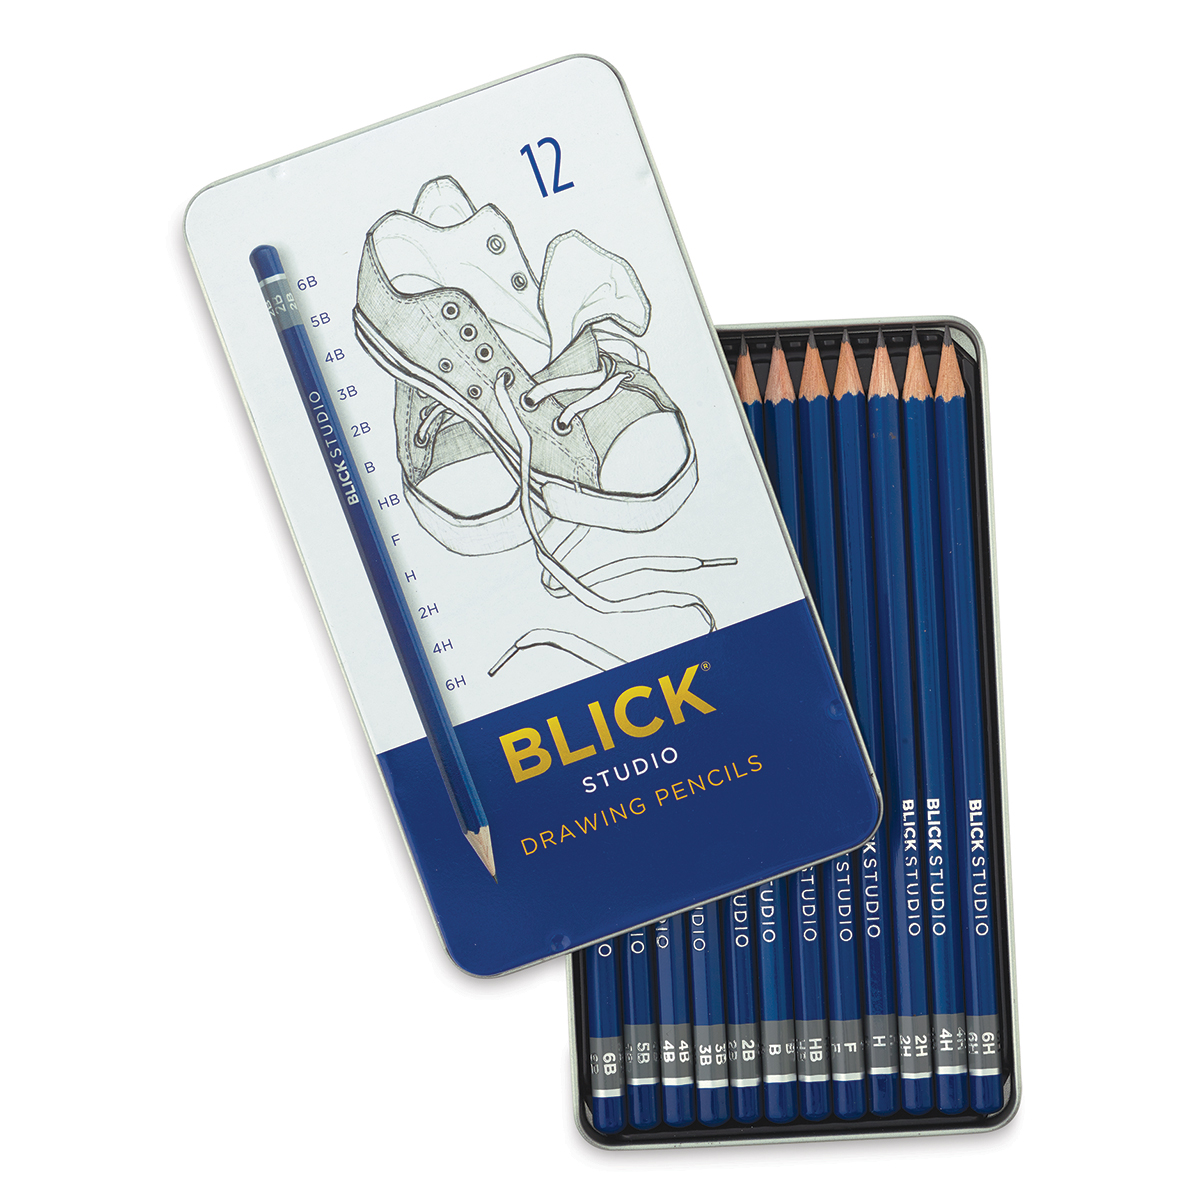 Blick Studio Drawing Pencils and Sets